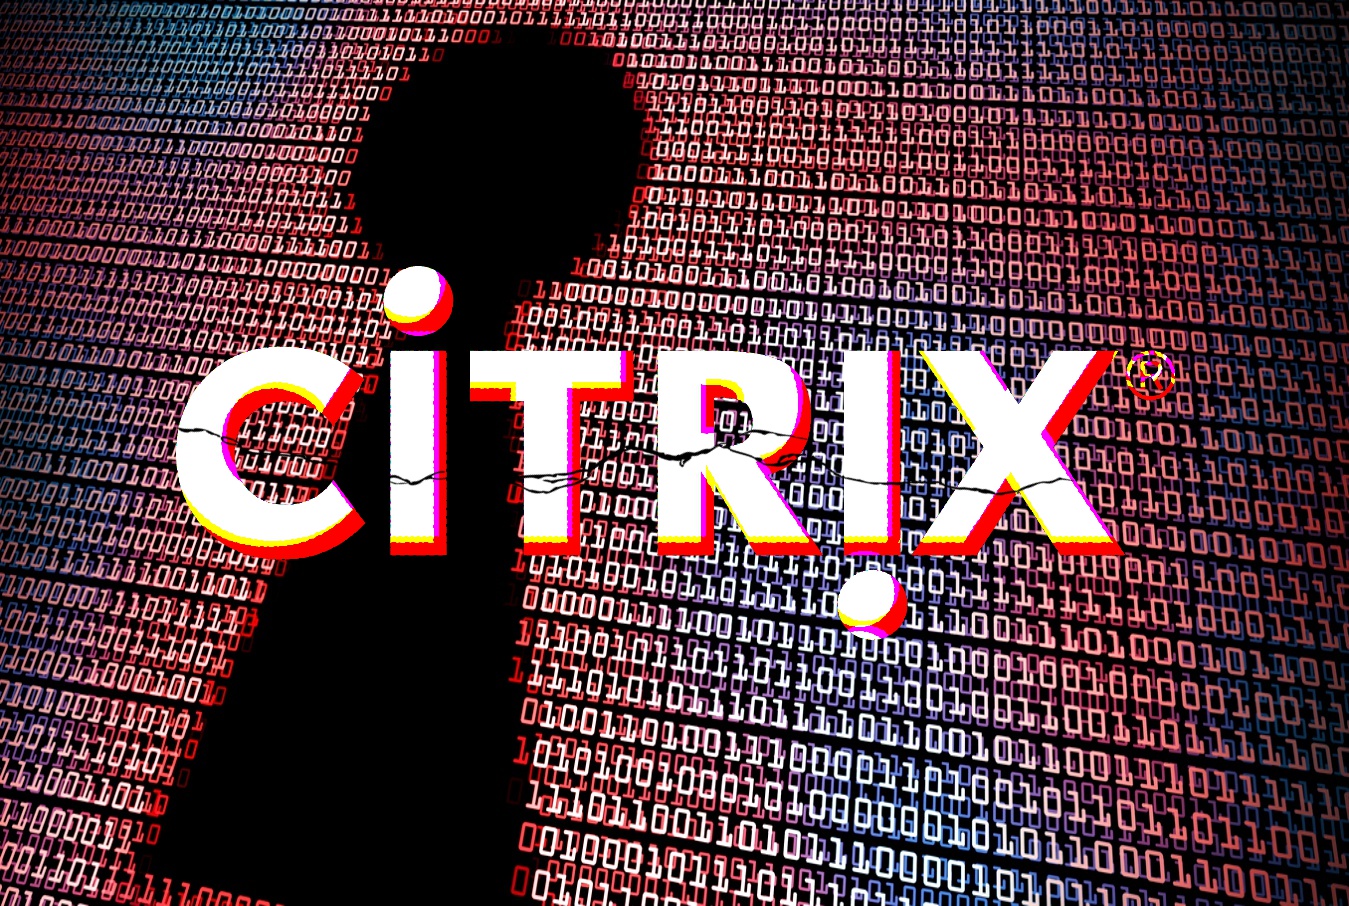 Hackers steal 6TB of data from enterprise software developer Citrix